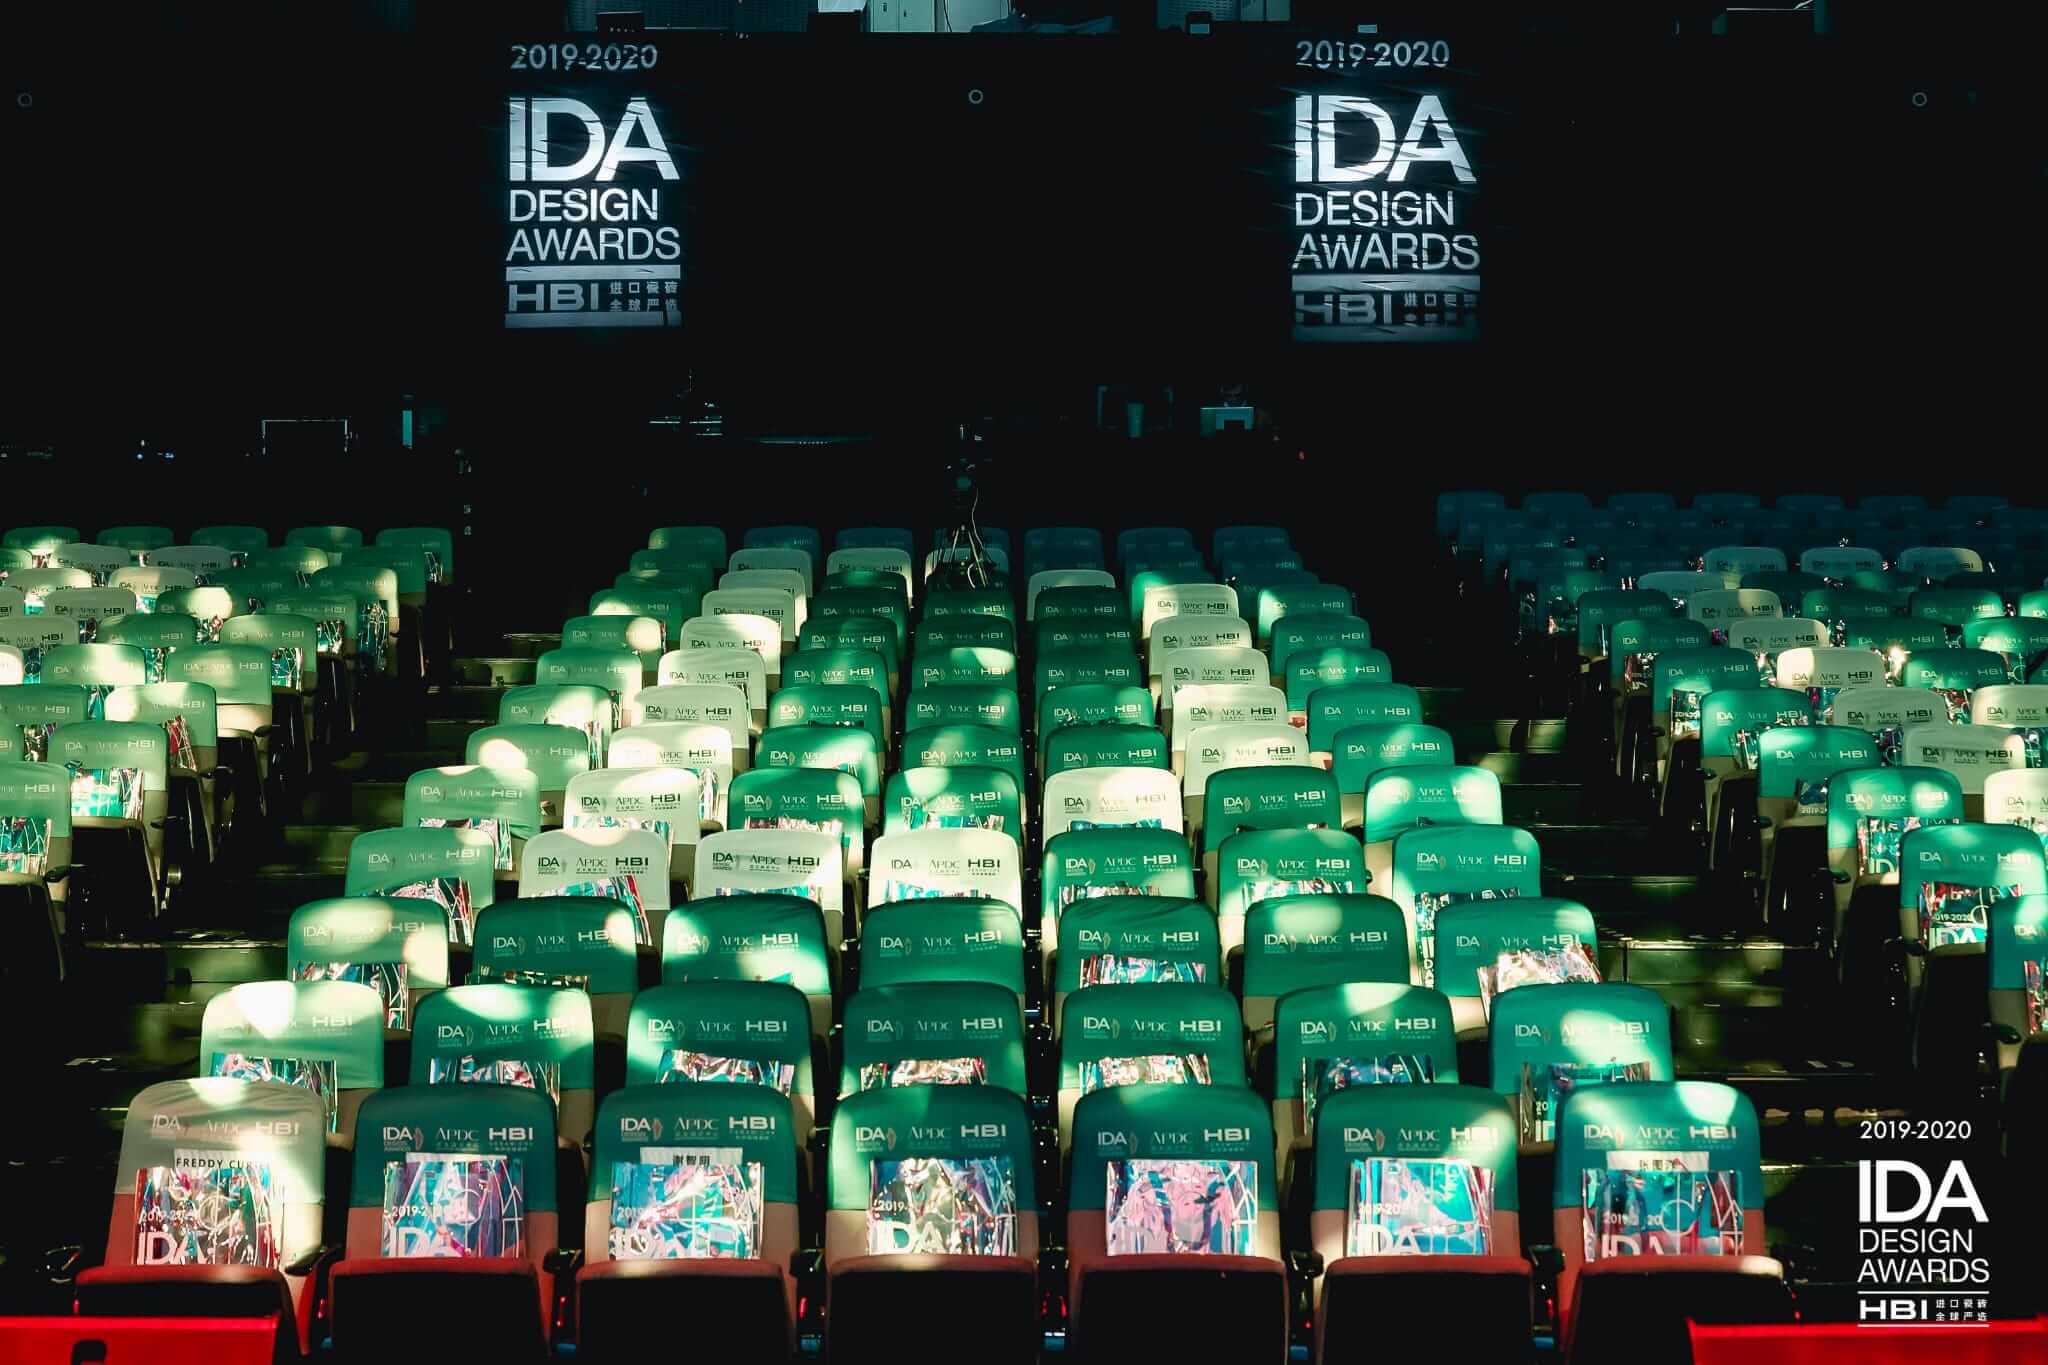 International Design Awards Ceremony 2019 2020